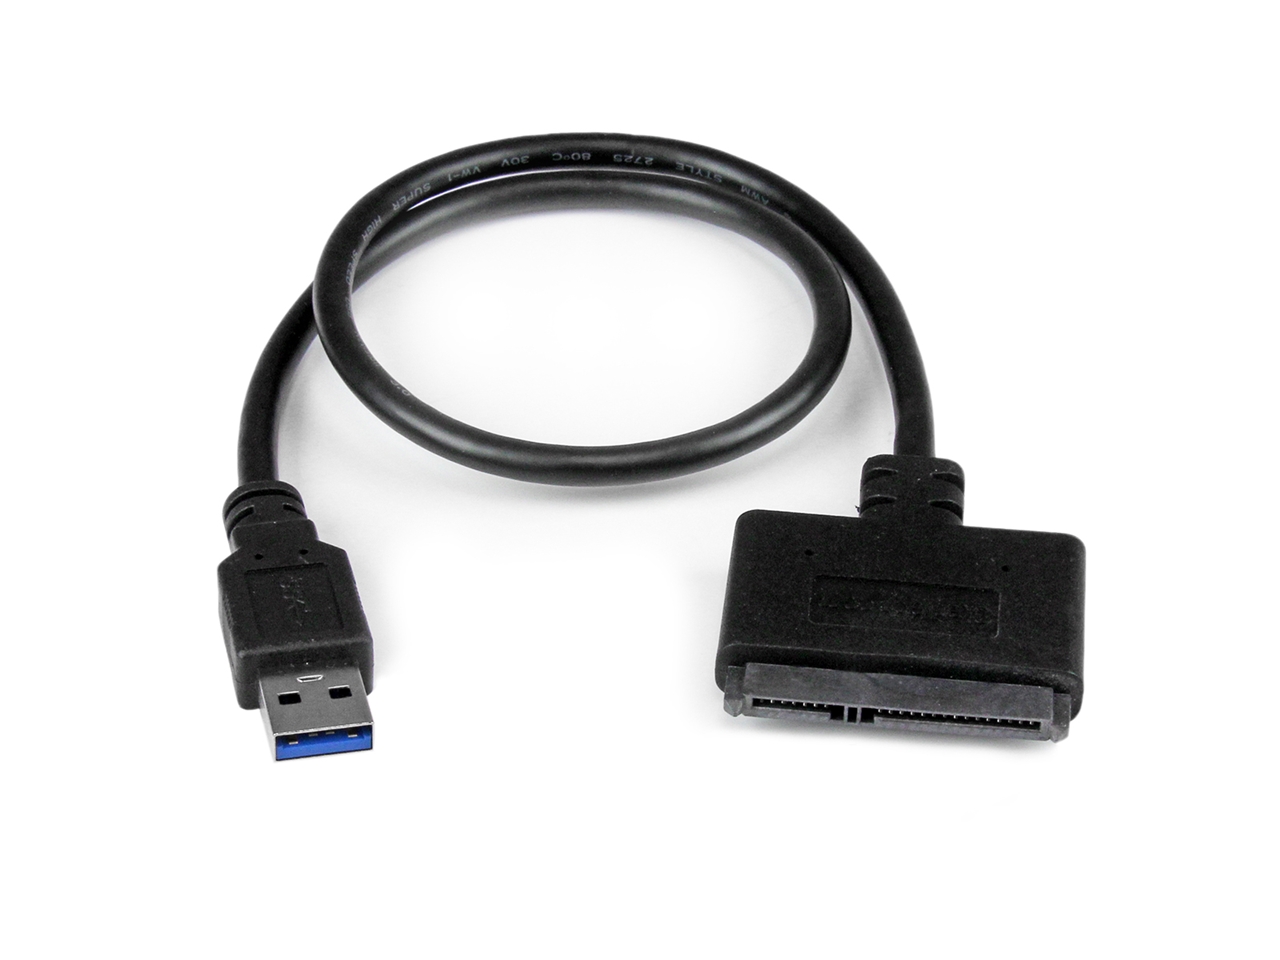 USB 3.0 To SATA III Hard Drive Adapter at Cables N More